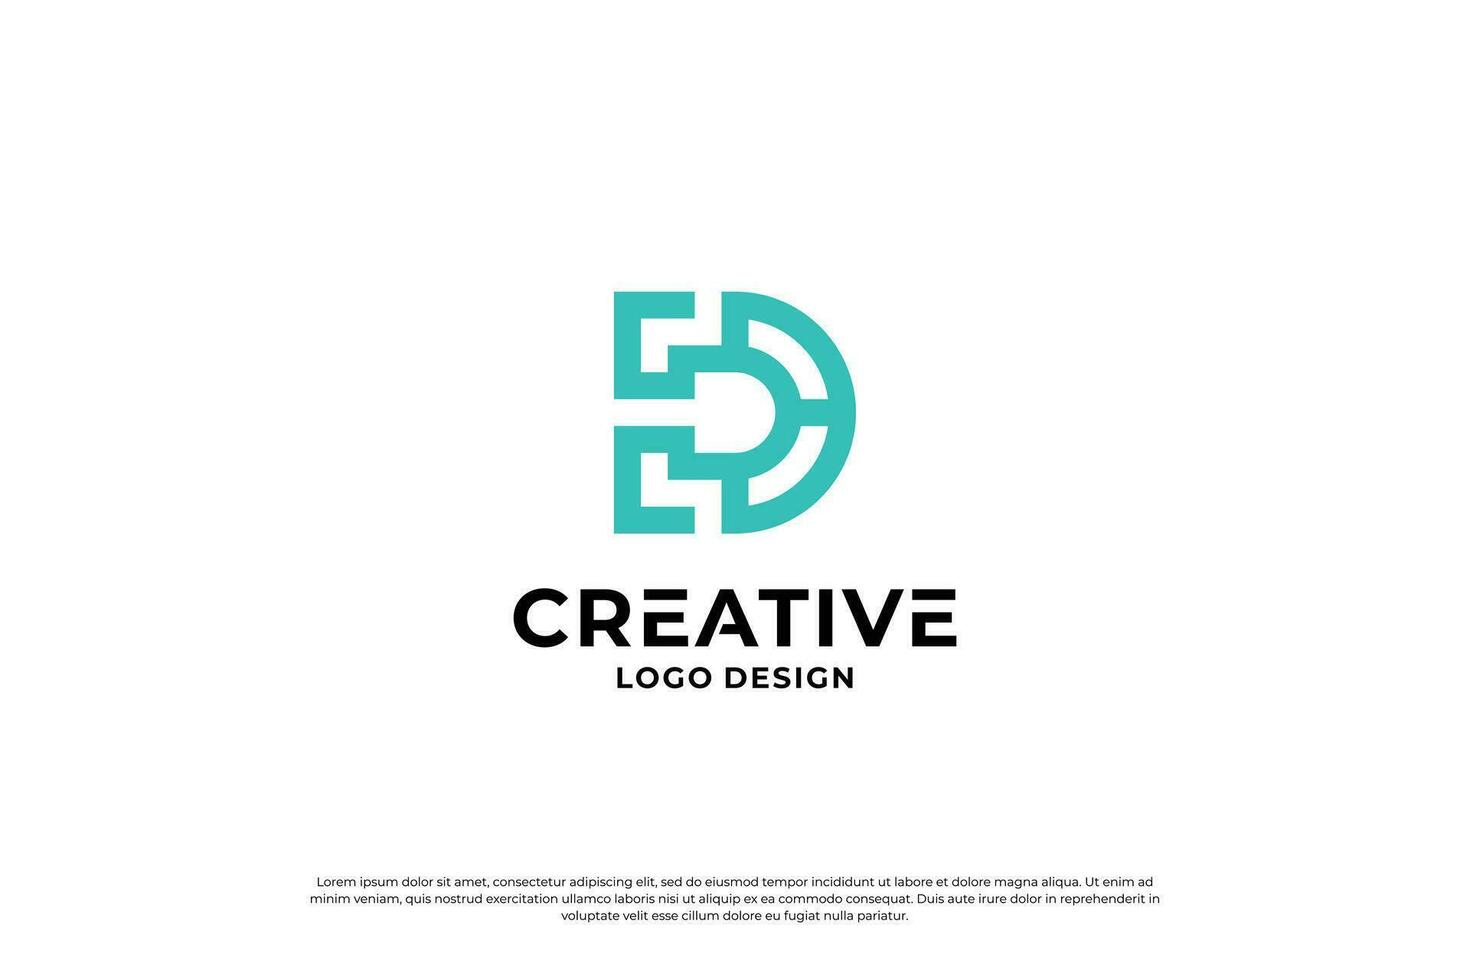 Brief d Logo Design Vektor. Initiale Briefe d zum Logo Marke. kreativ d Zeichen Initiale Brief. vektor